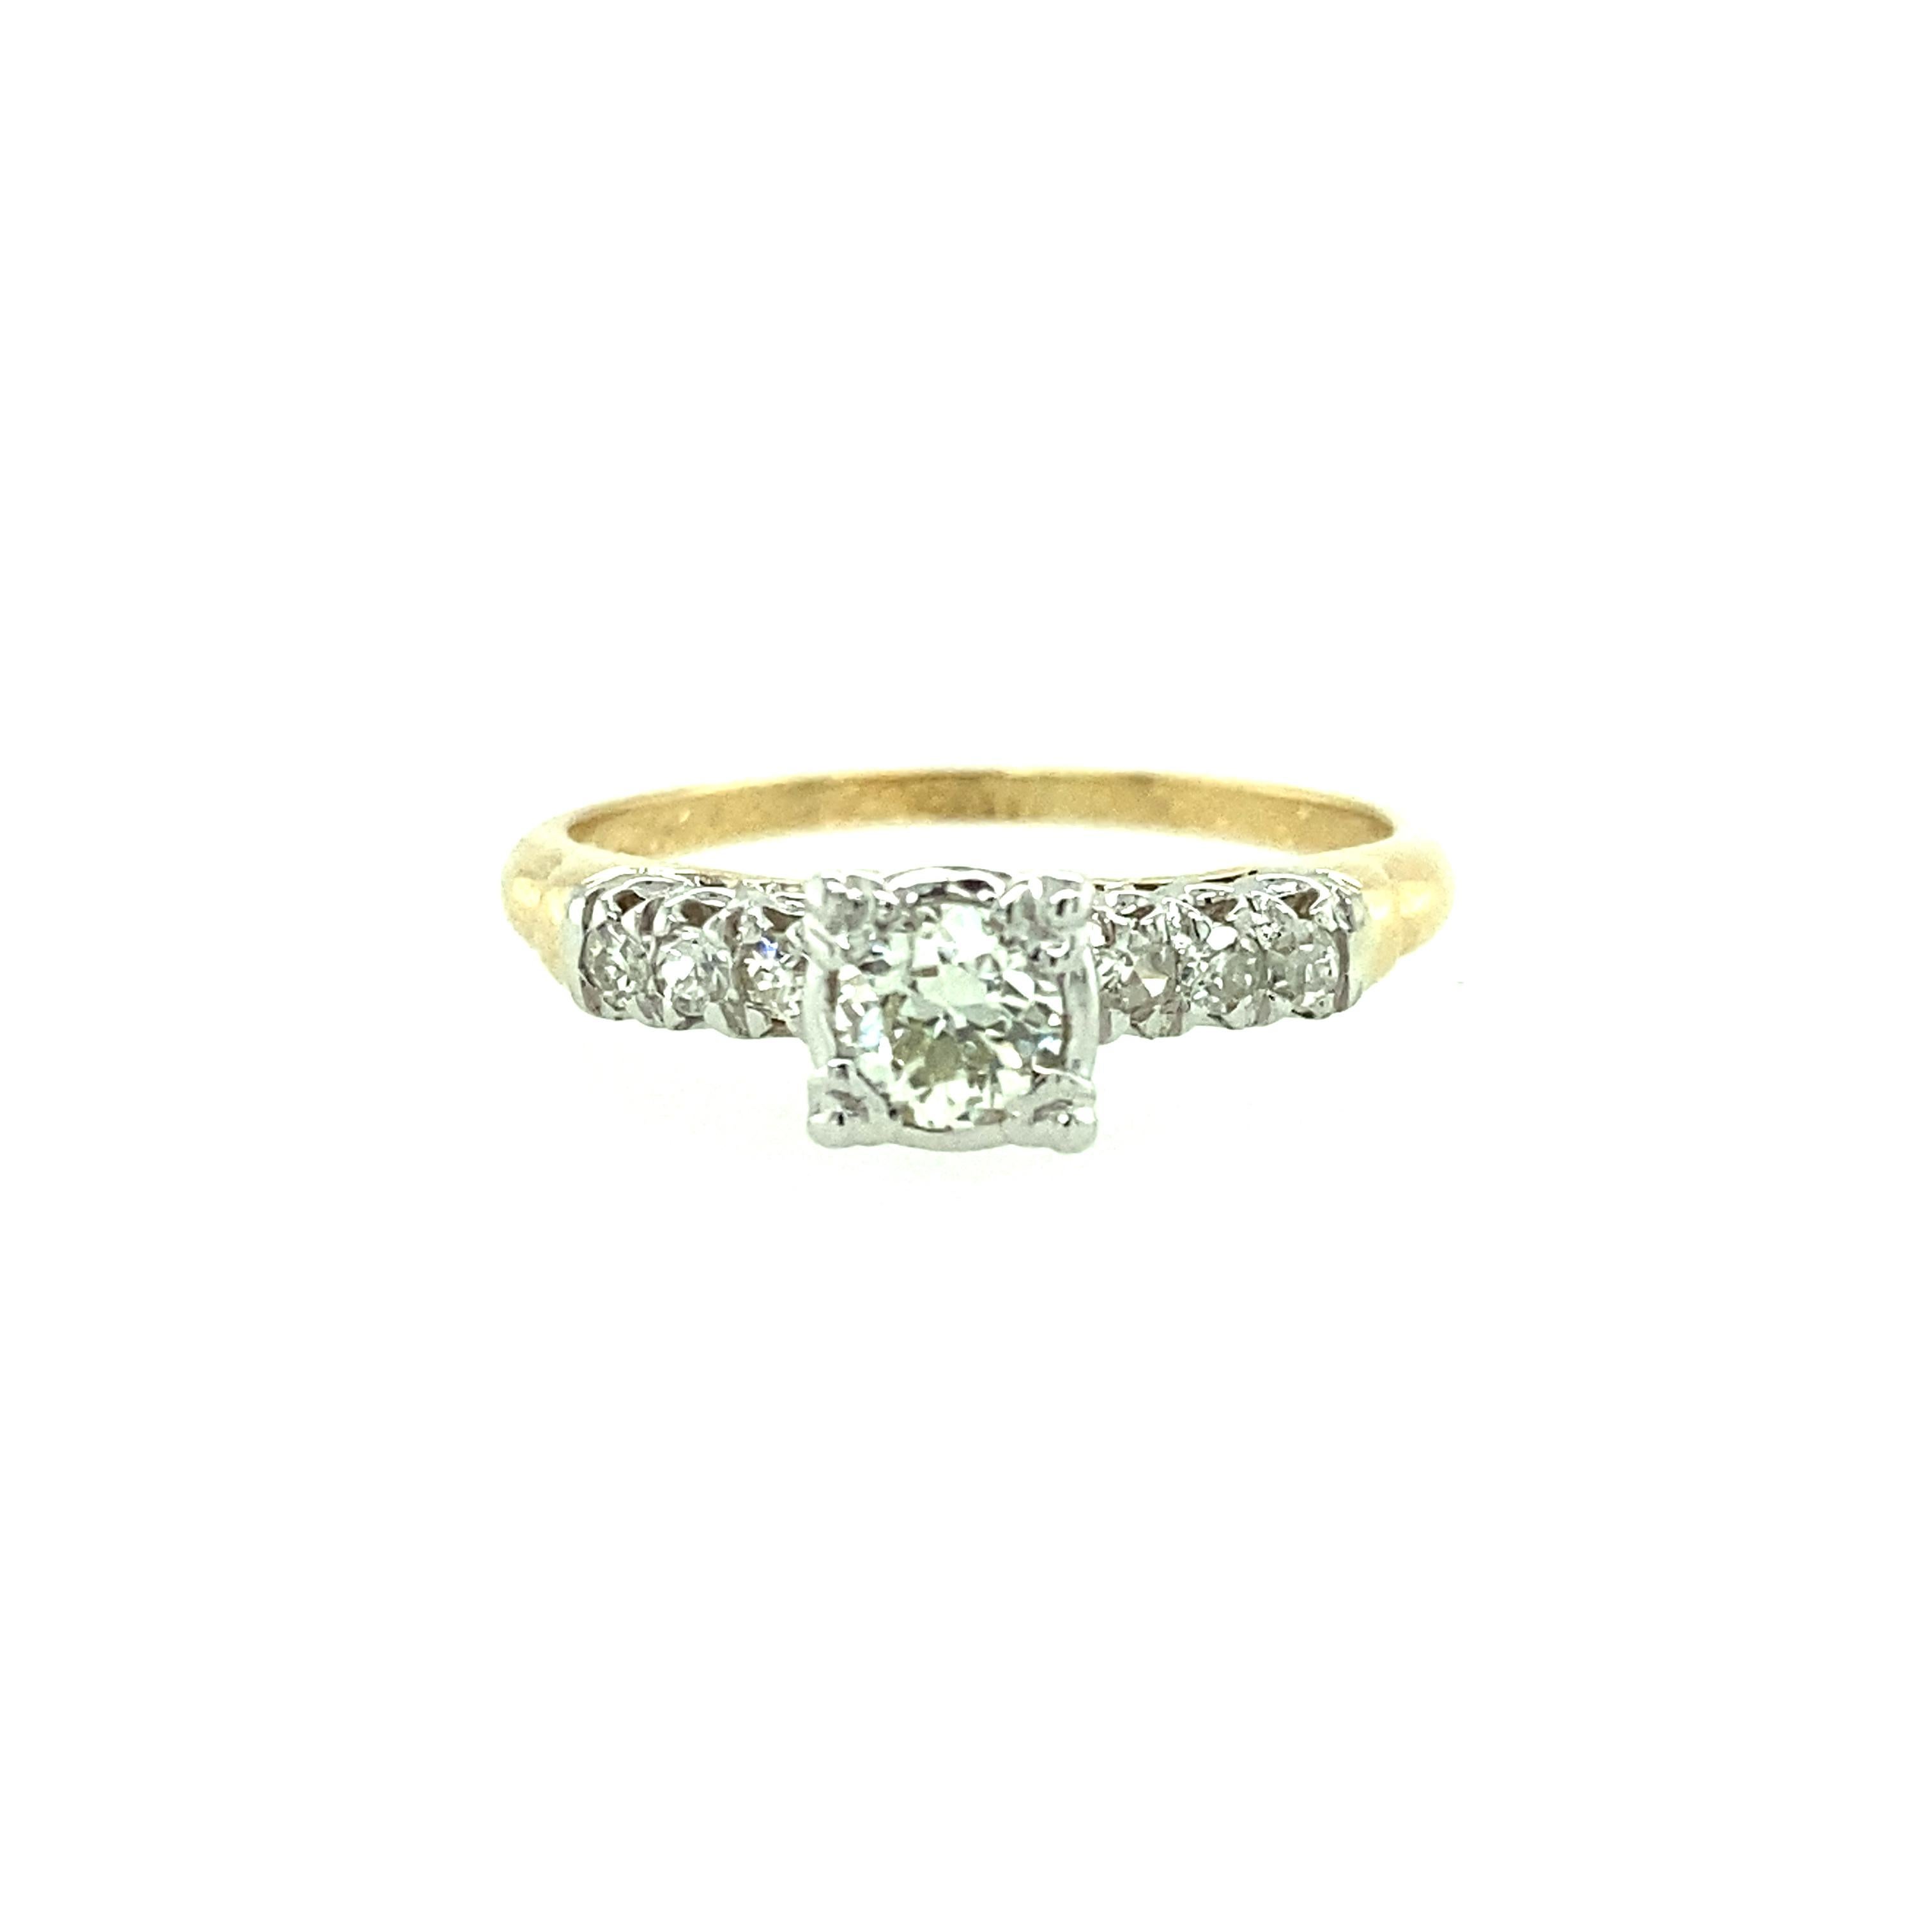 Old European Cut Diamond Engagement Ring Circa 1941 3